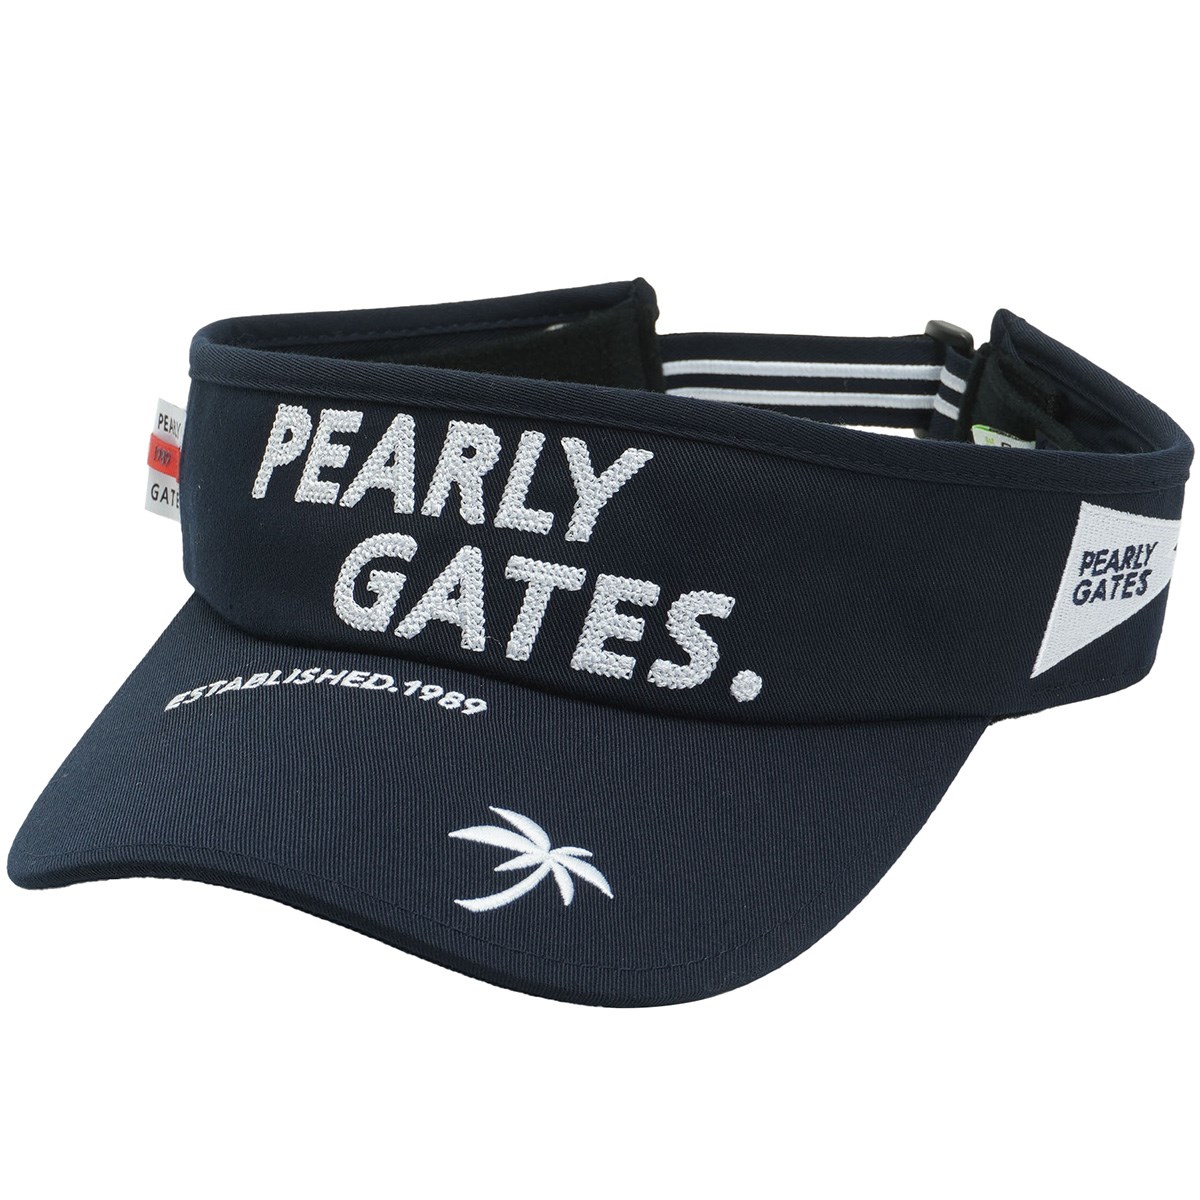 PEARLY GATES(パーリーゲイツ) サンバイザー ネイビー×白 ポリエステル